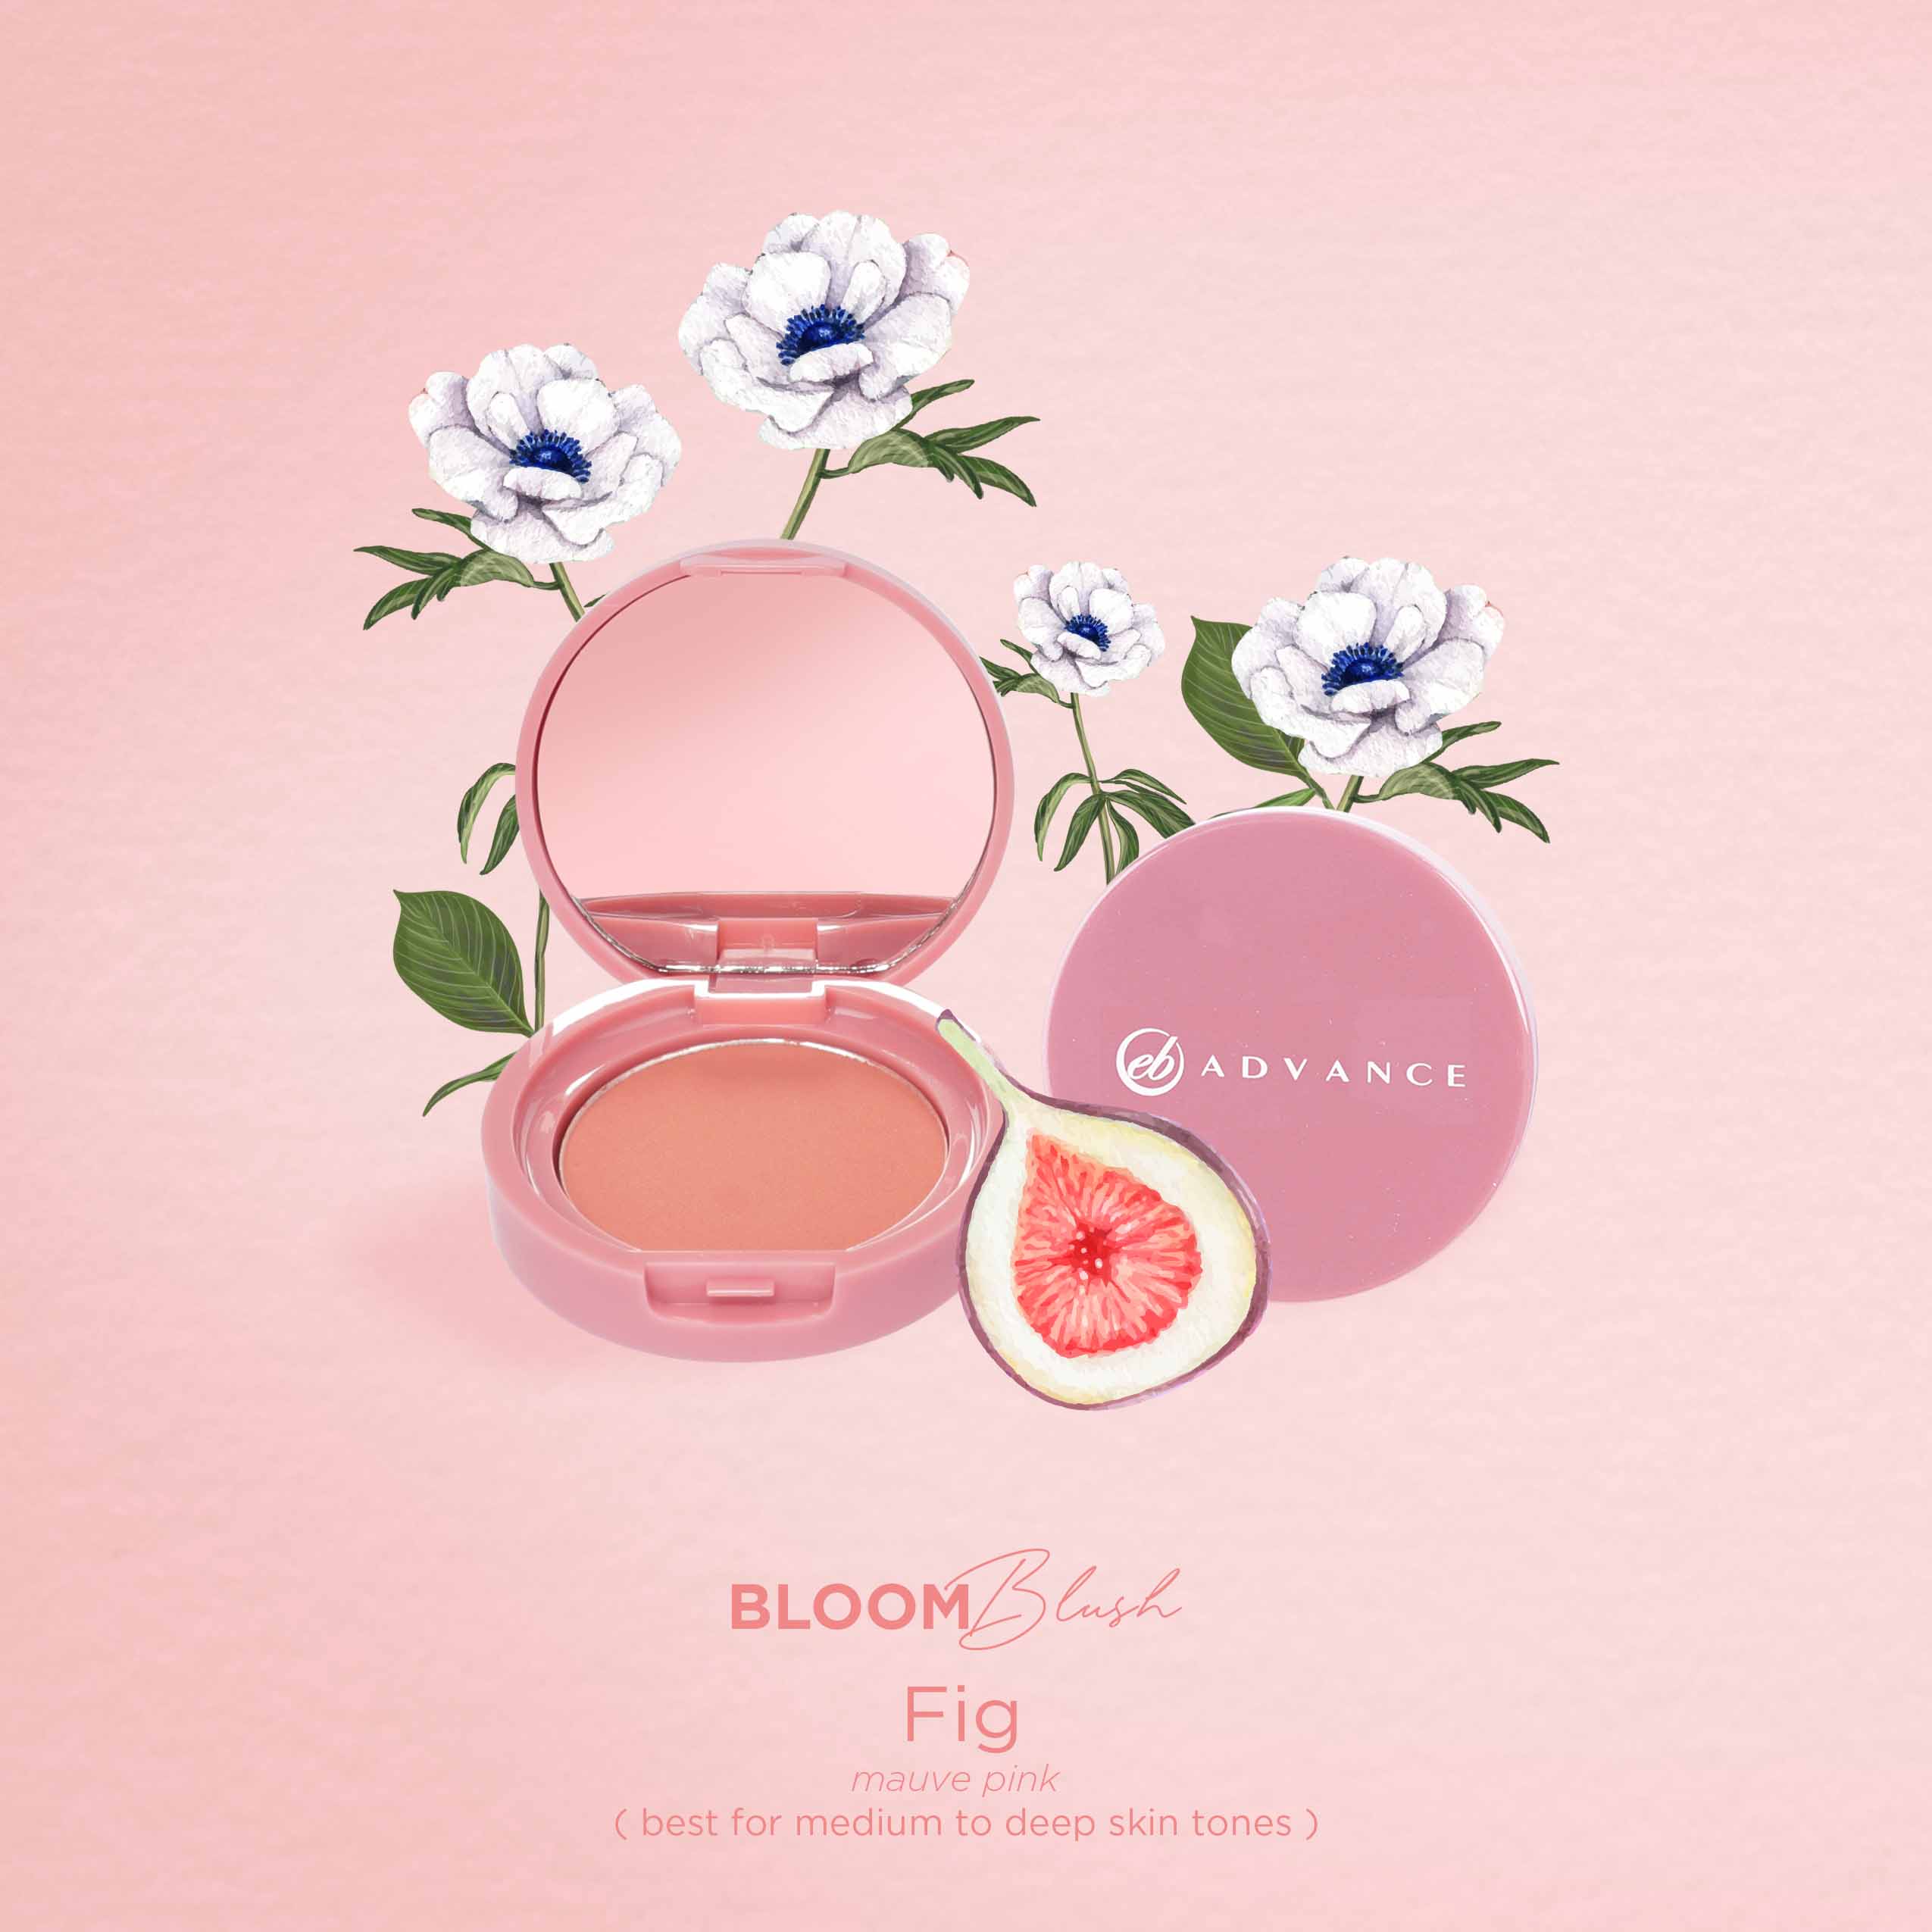 Ever Bilena Advance Bloom Blush Fig